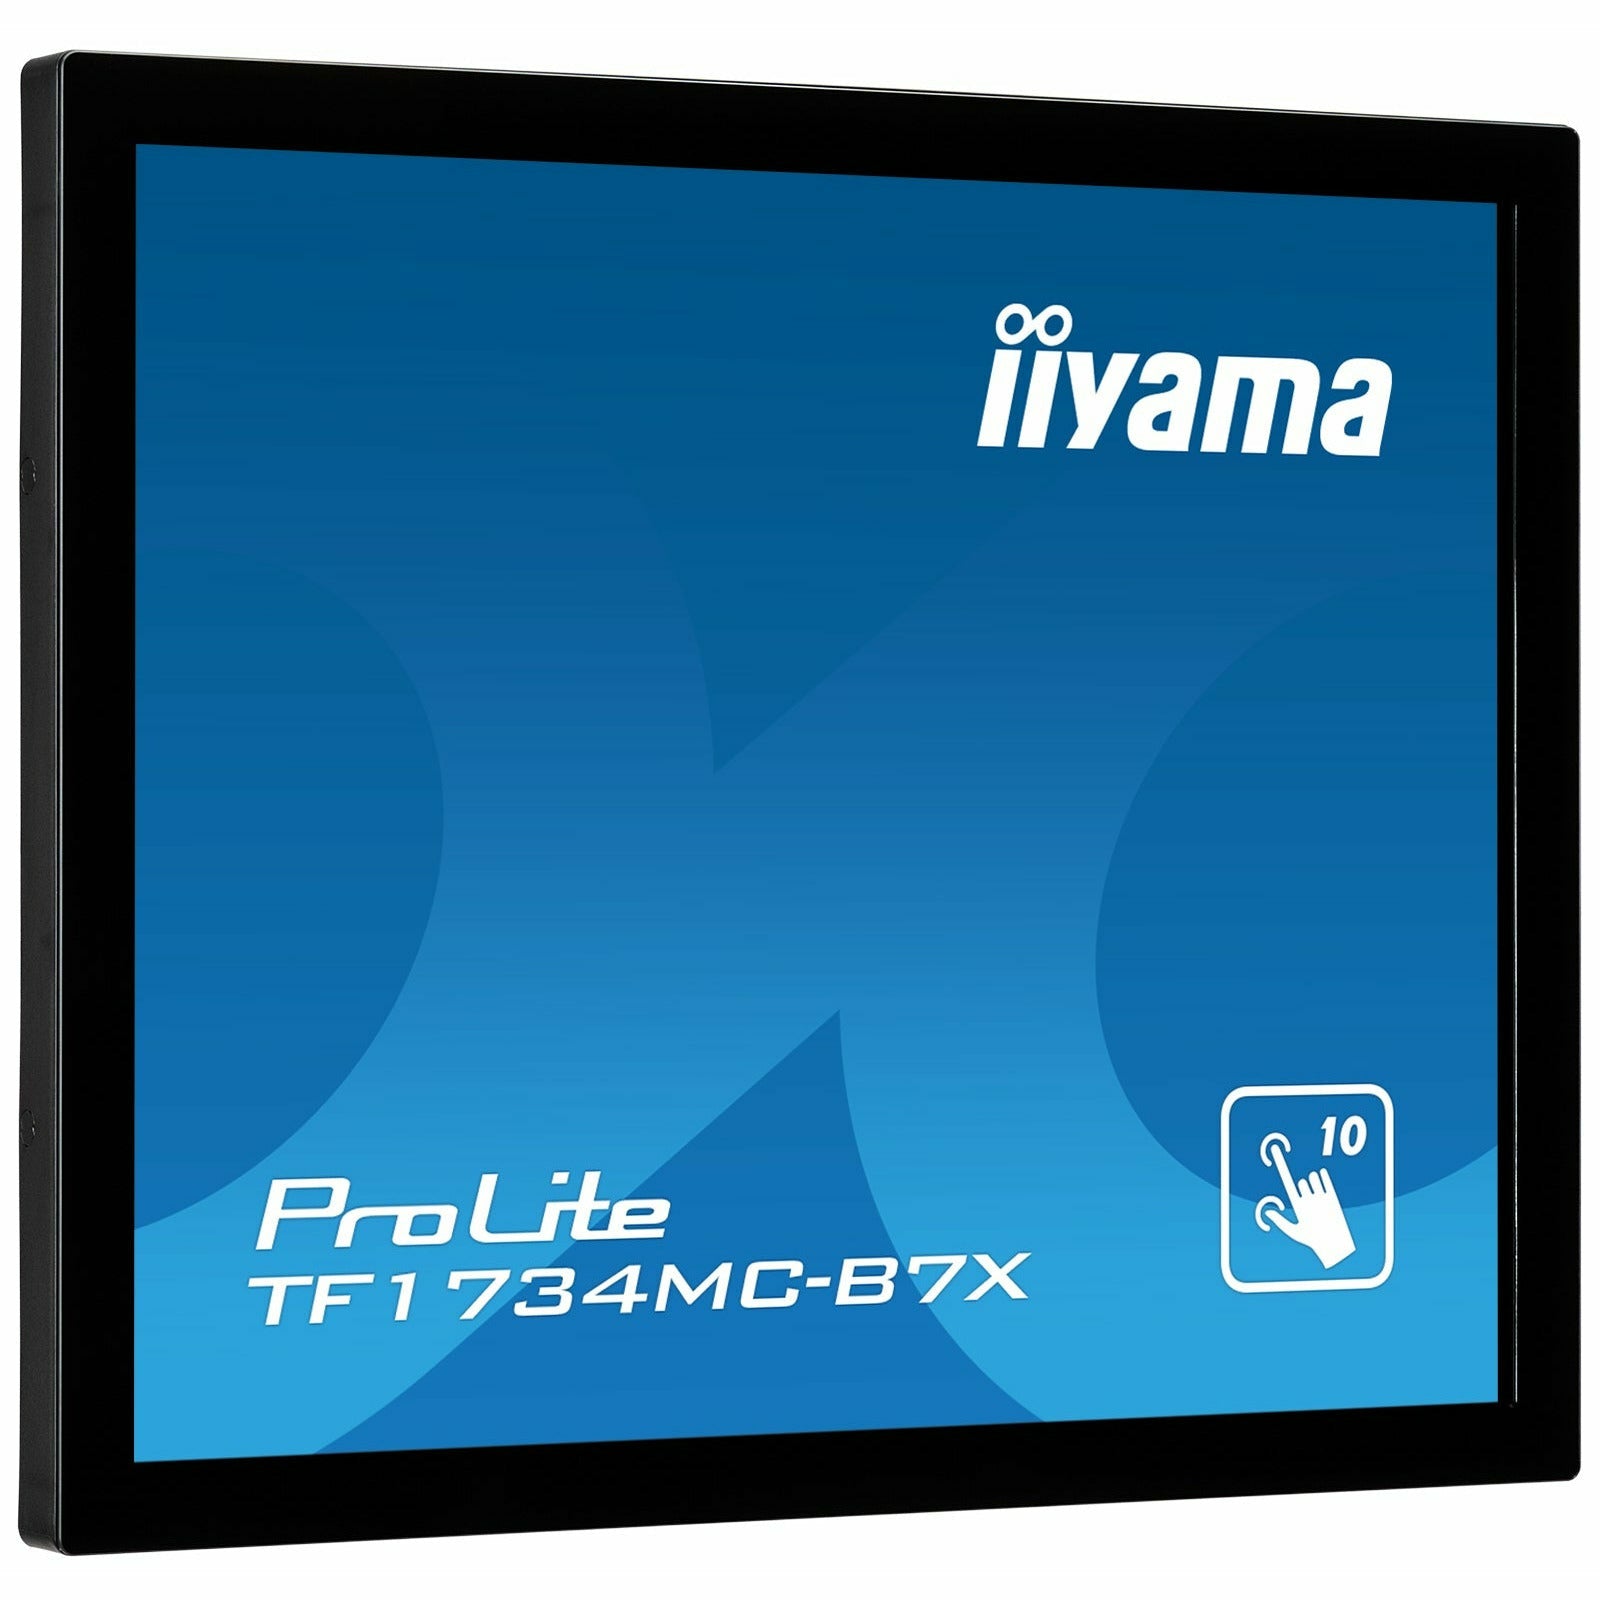 iiyama ProLite TF1734MC-B7X 17" Capacitive Touch Screen Display